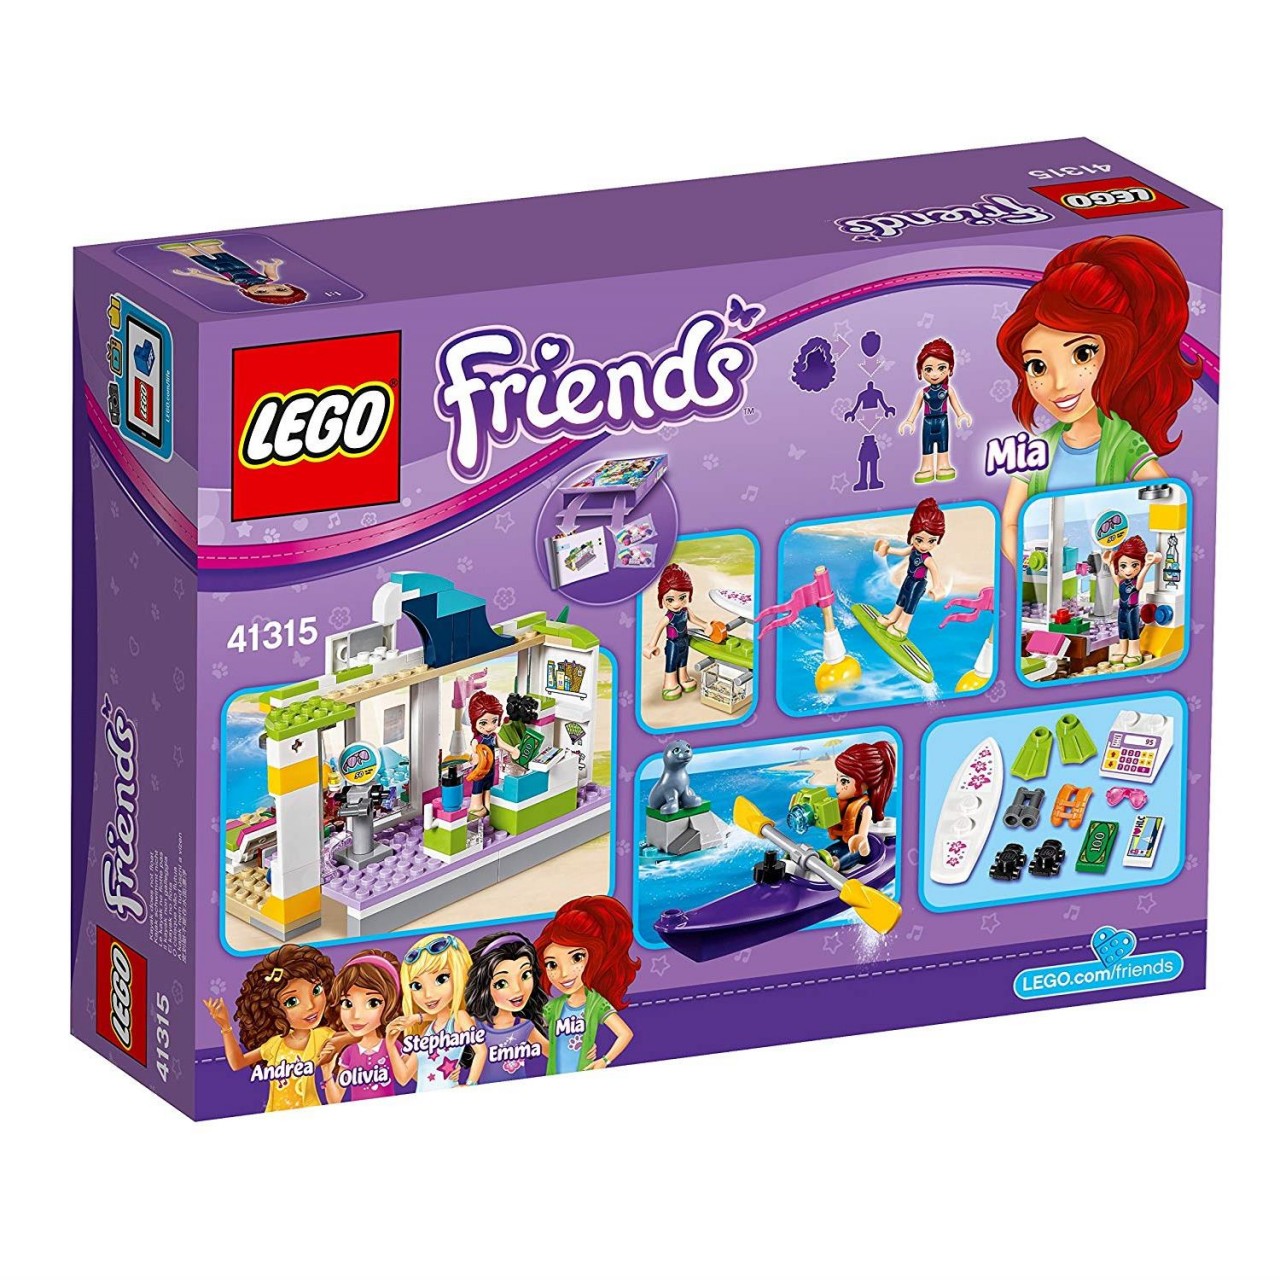 LEGO FRIENDS 41315 Heartlake Surfladen